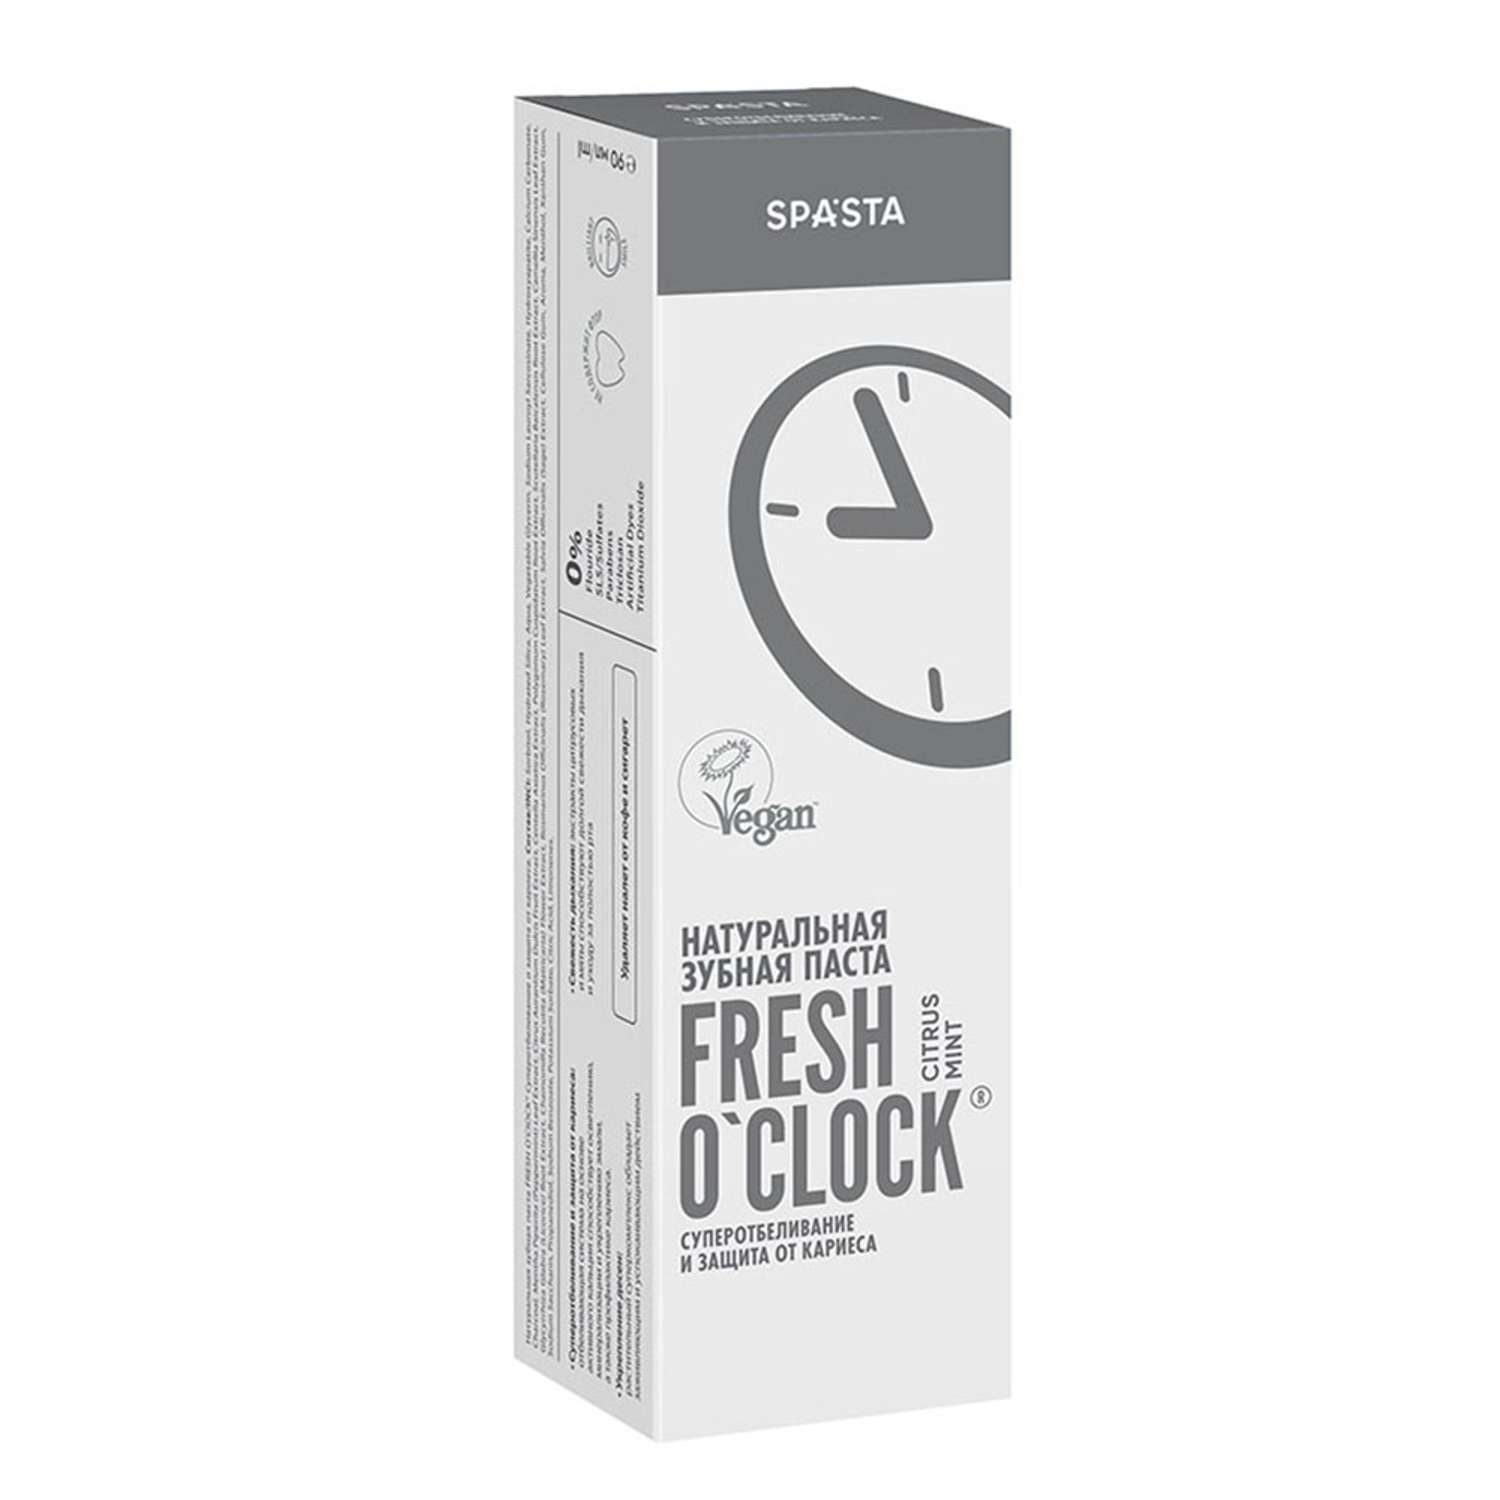 Натуральная зубная паста Spasta Fresh o’clock суперотбеливание и защита от кариеса 90мл - фото 2